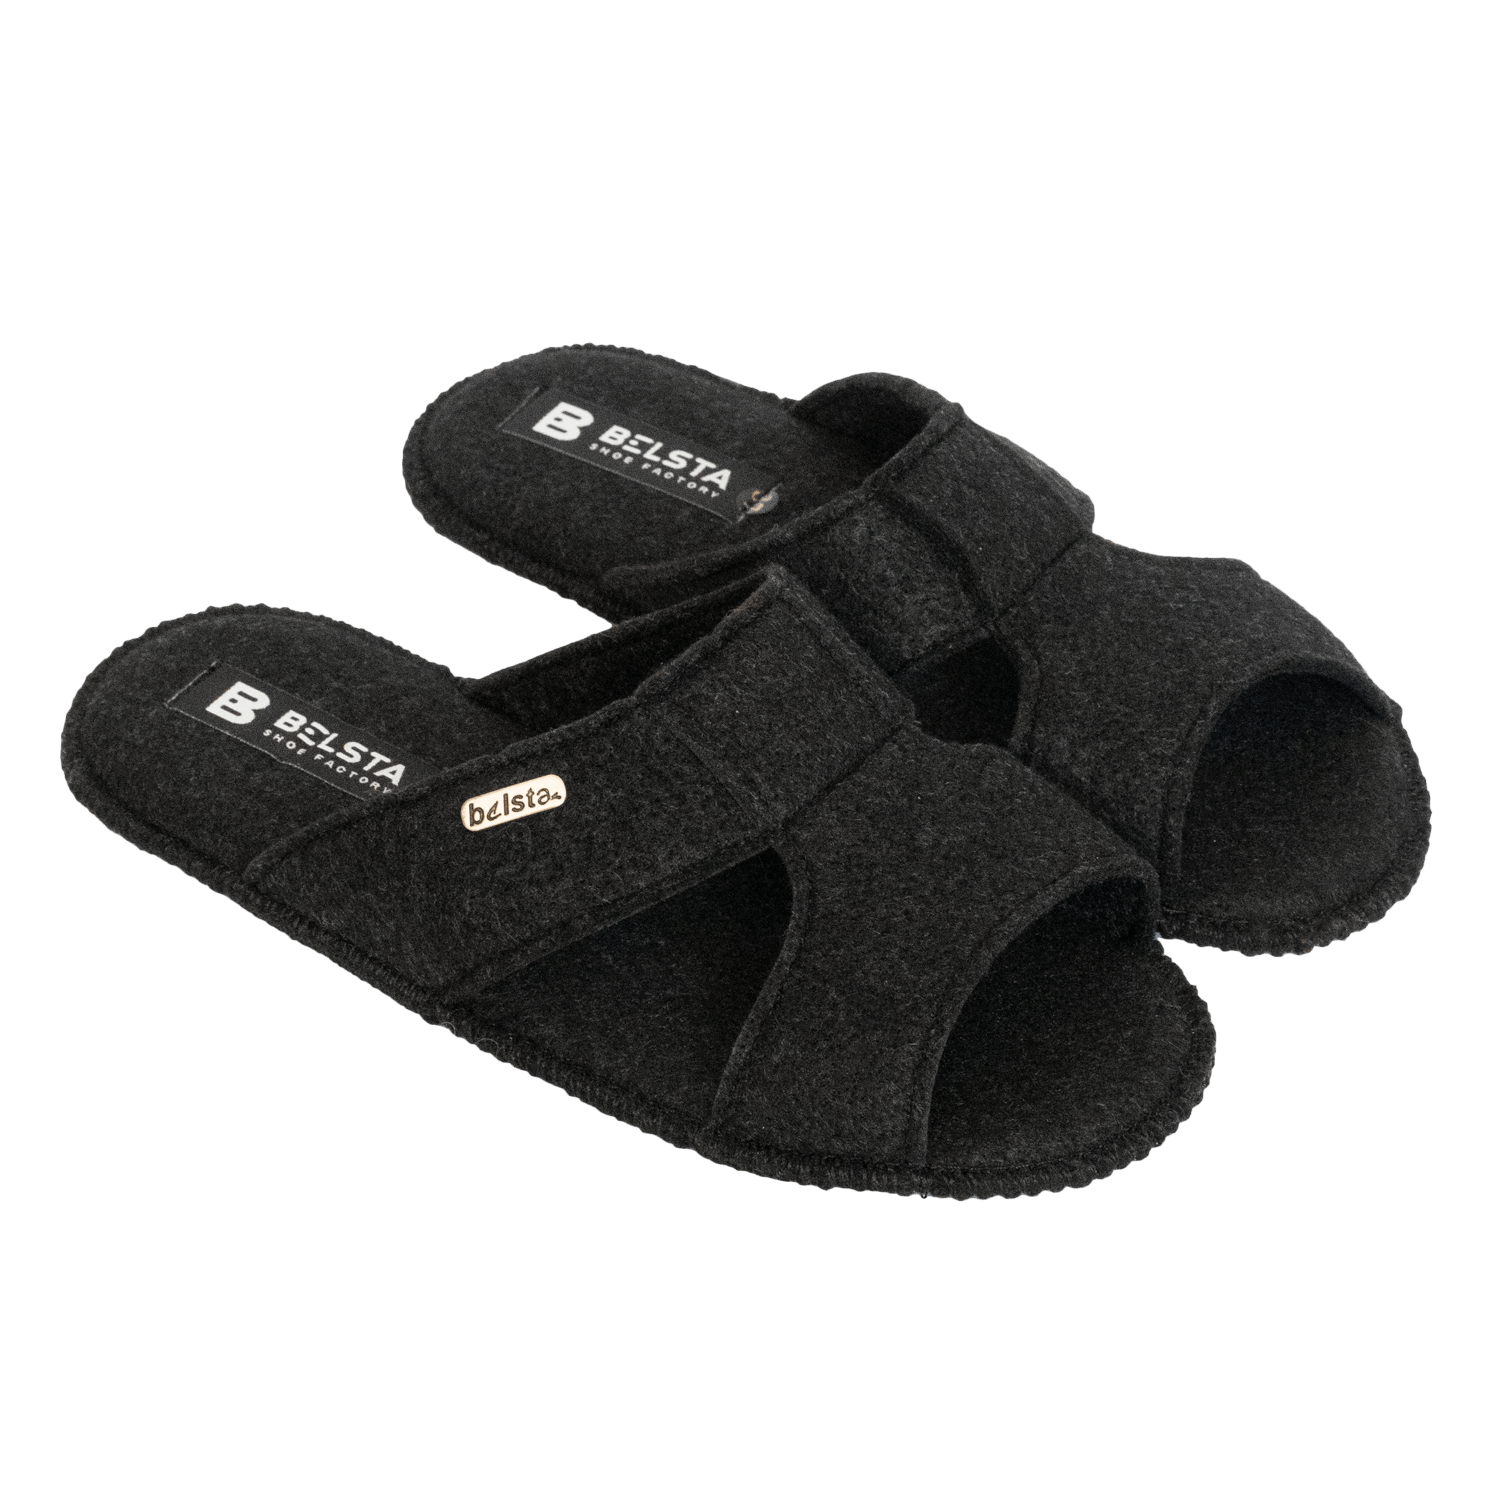 Teenage felt slippers for parquet by BELSTA  - 37